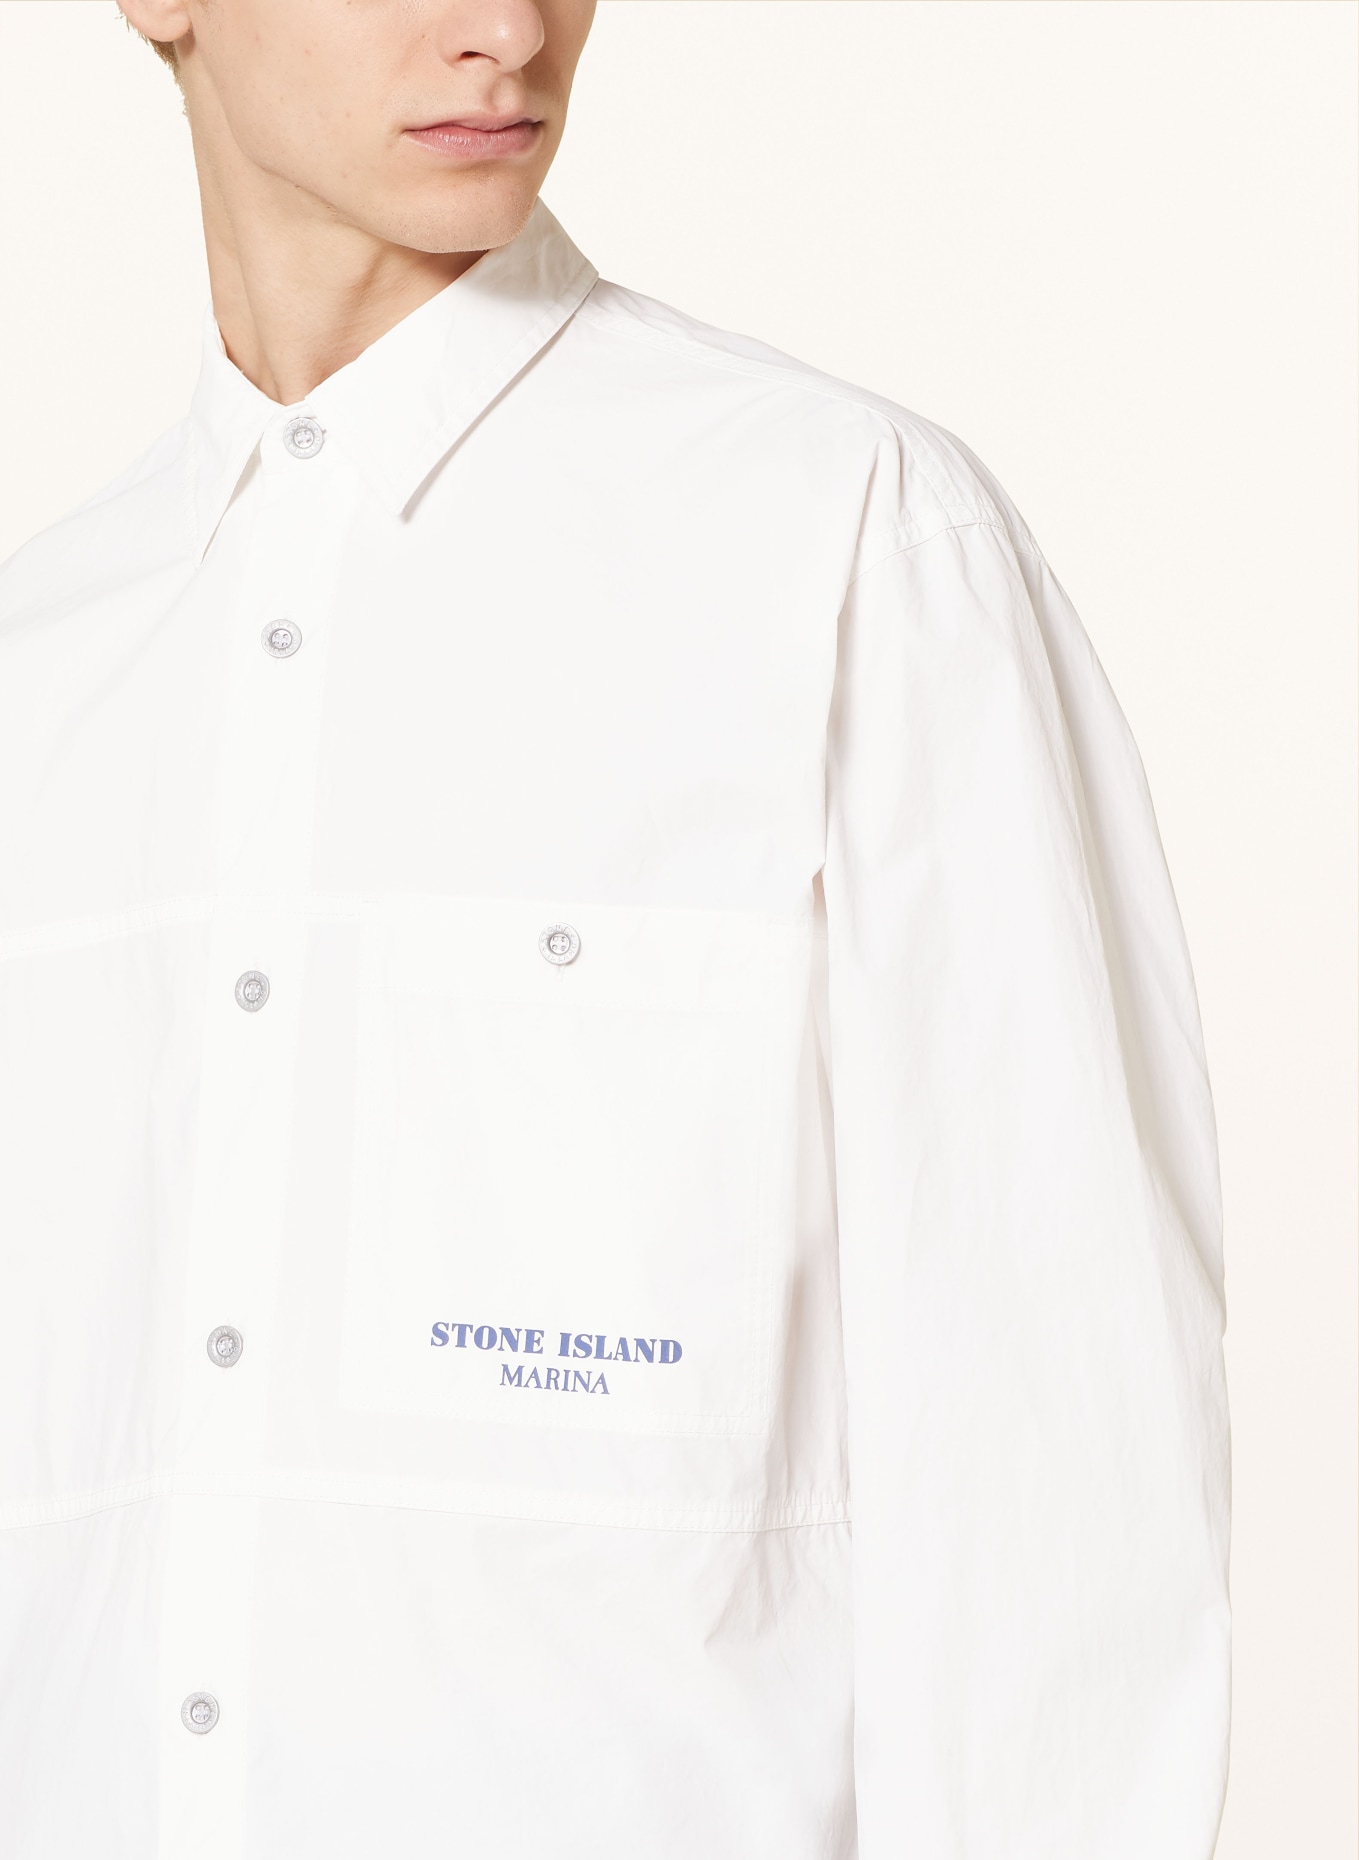 STONE ISLAND Shirt MARINA comfort fit, Color: WHITE/ DARK BLUE (Image 4)